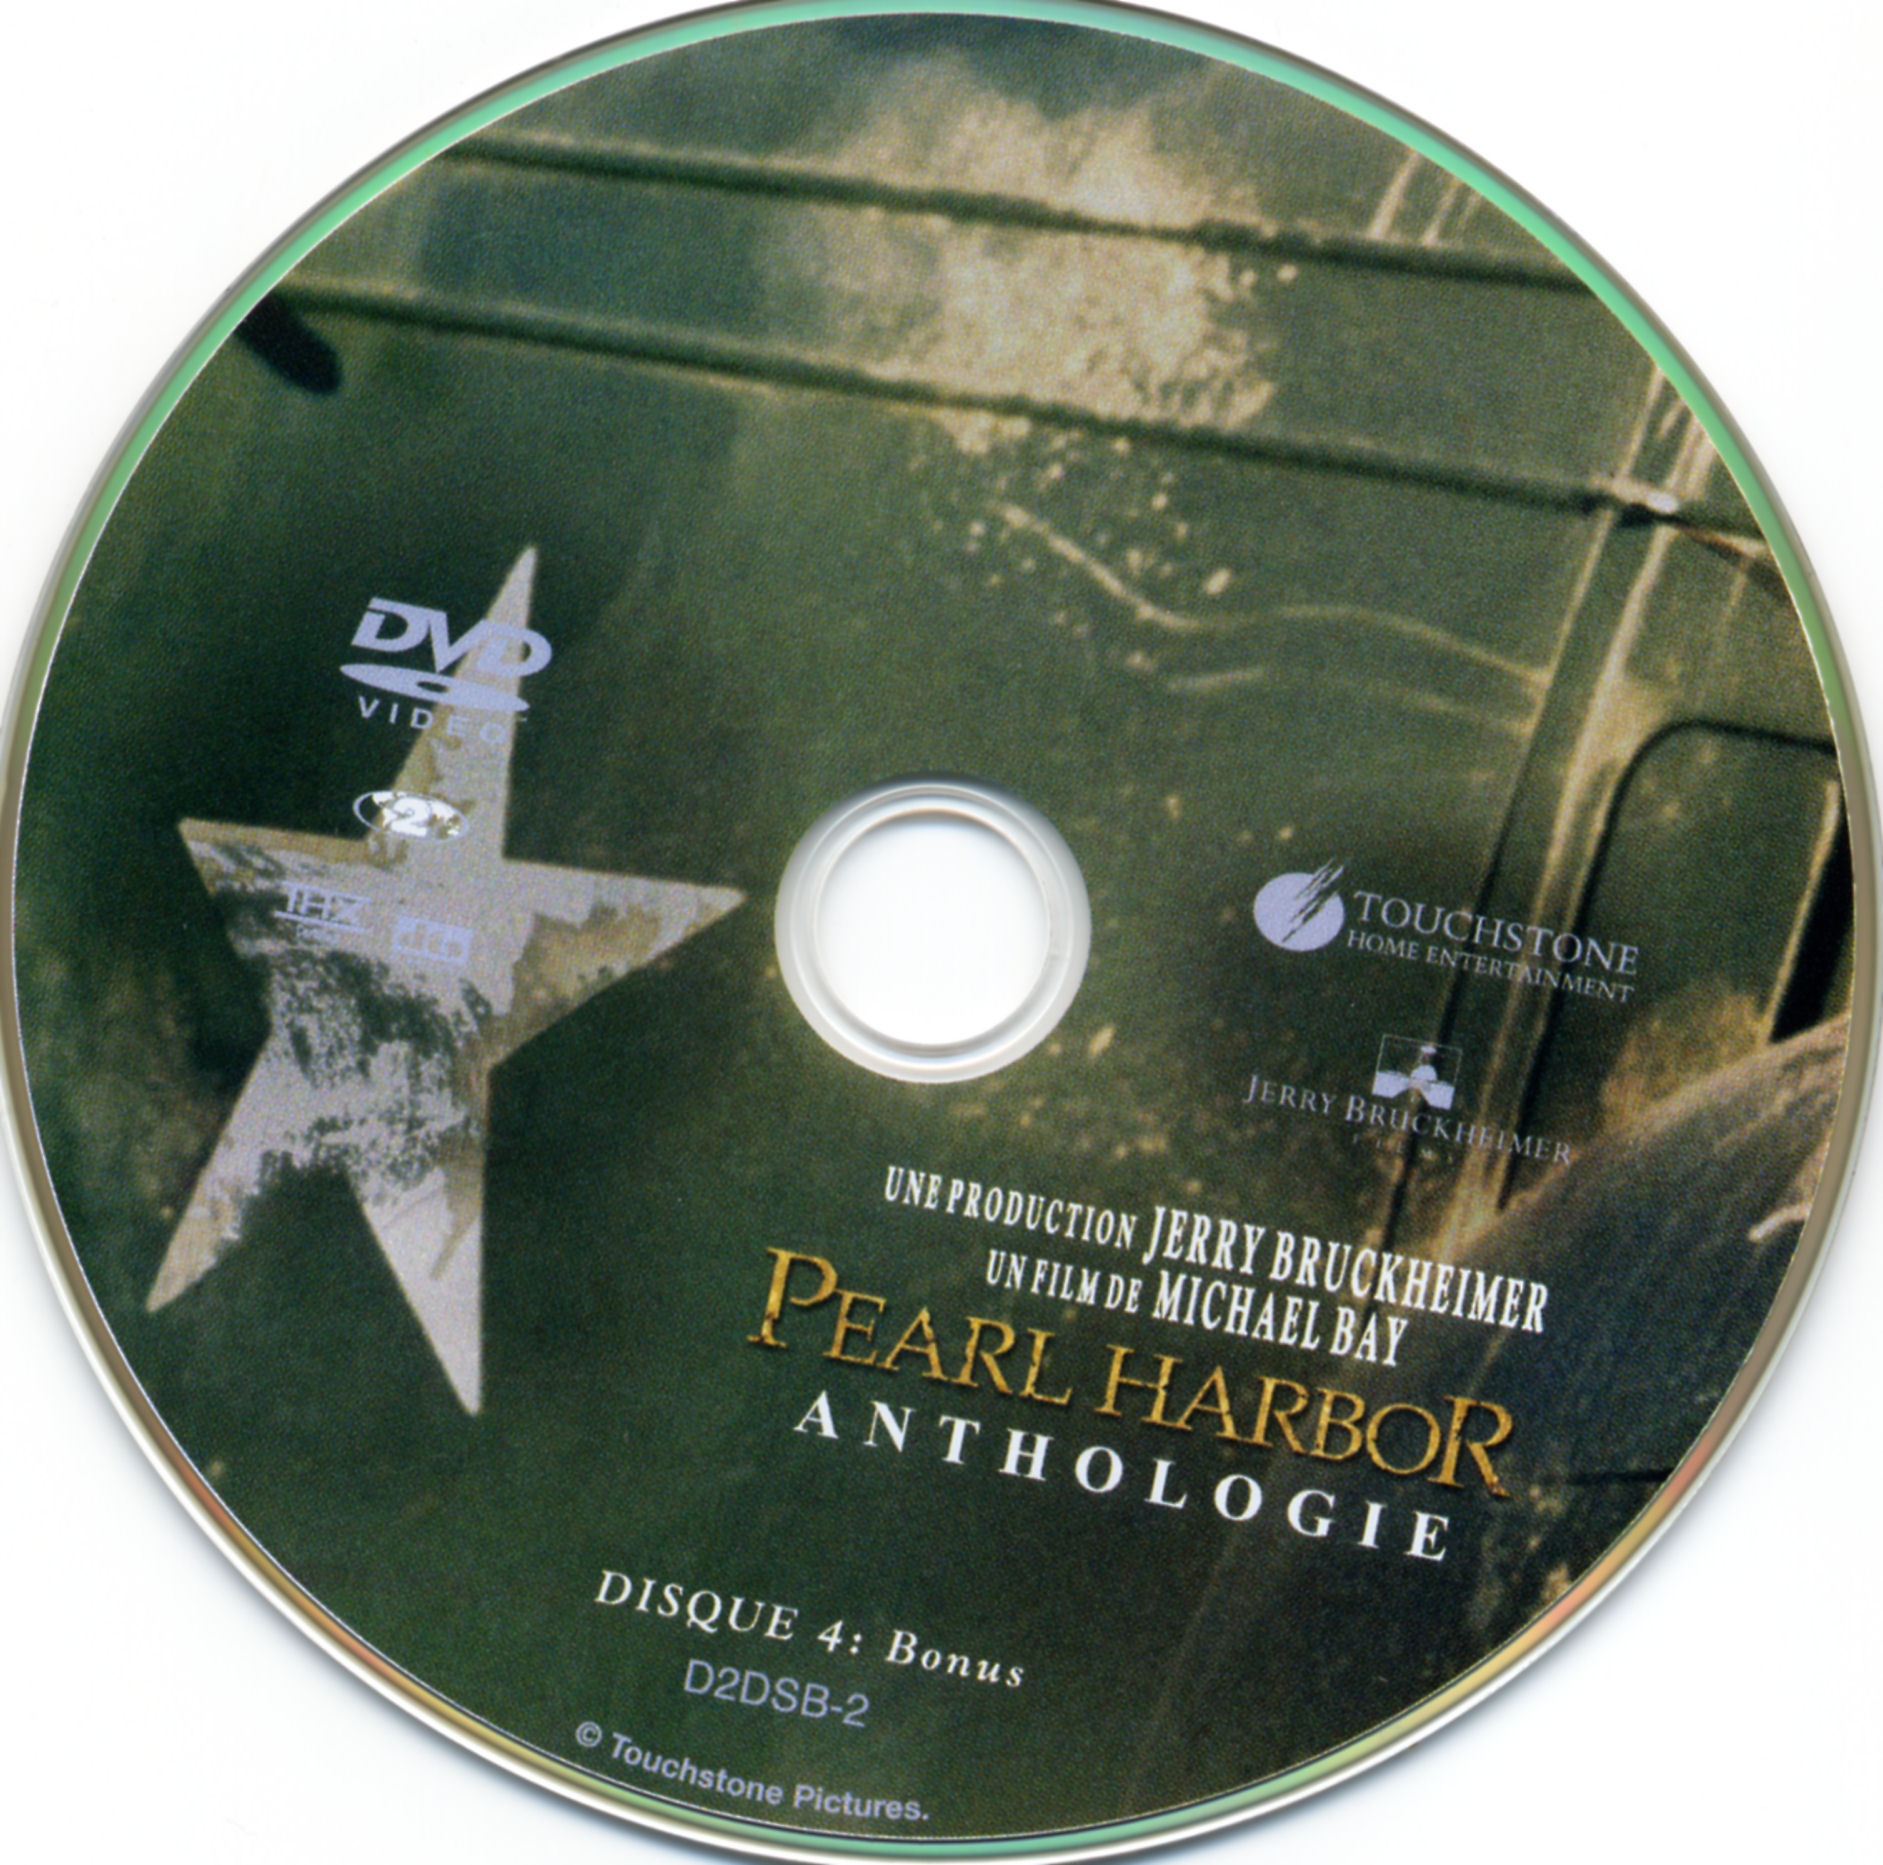 Pearl Harbor Anthologie DISC 4